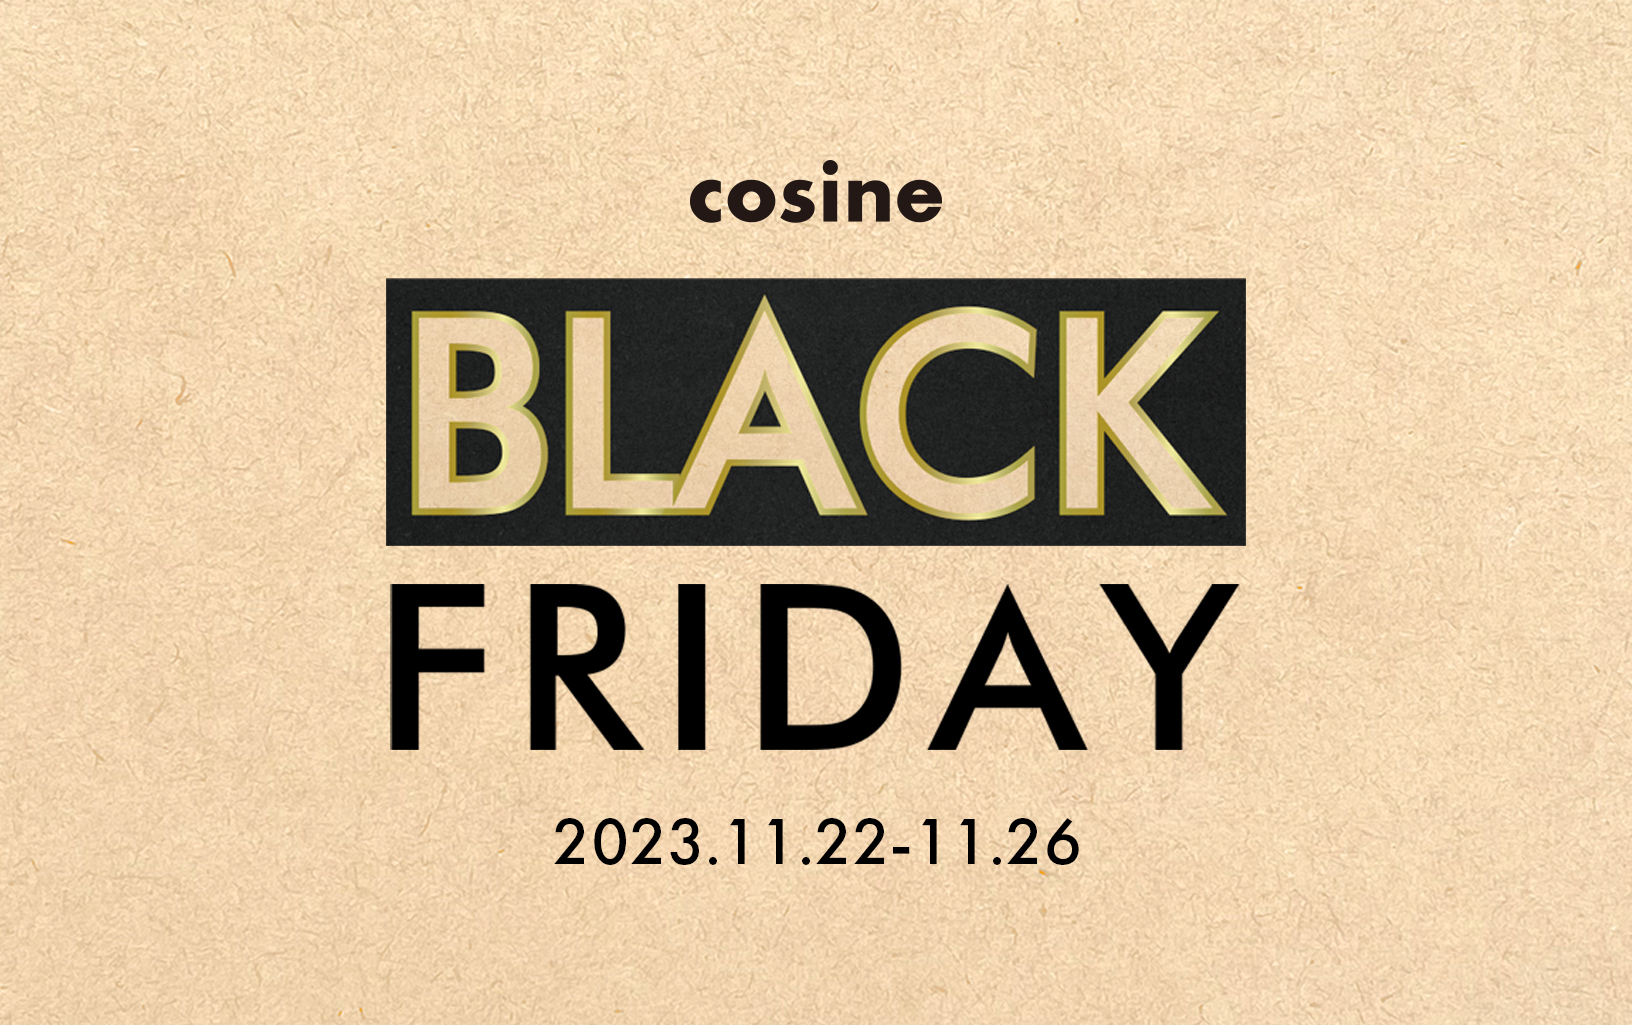 cosine BLACK FRIDAY 2023.11.22-2023.11.26